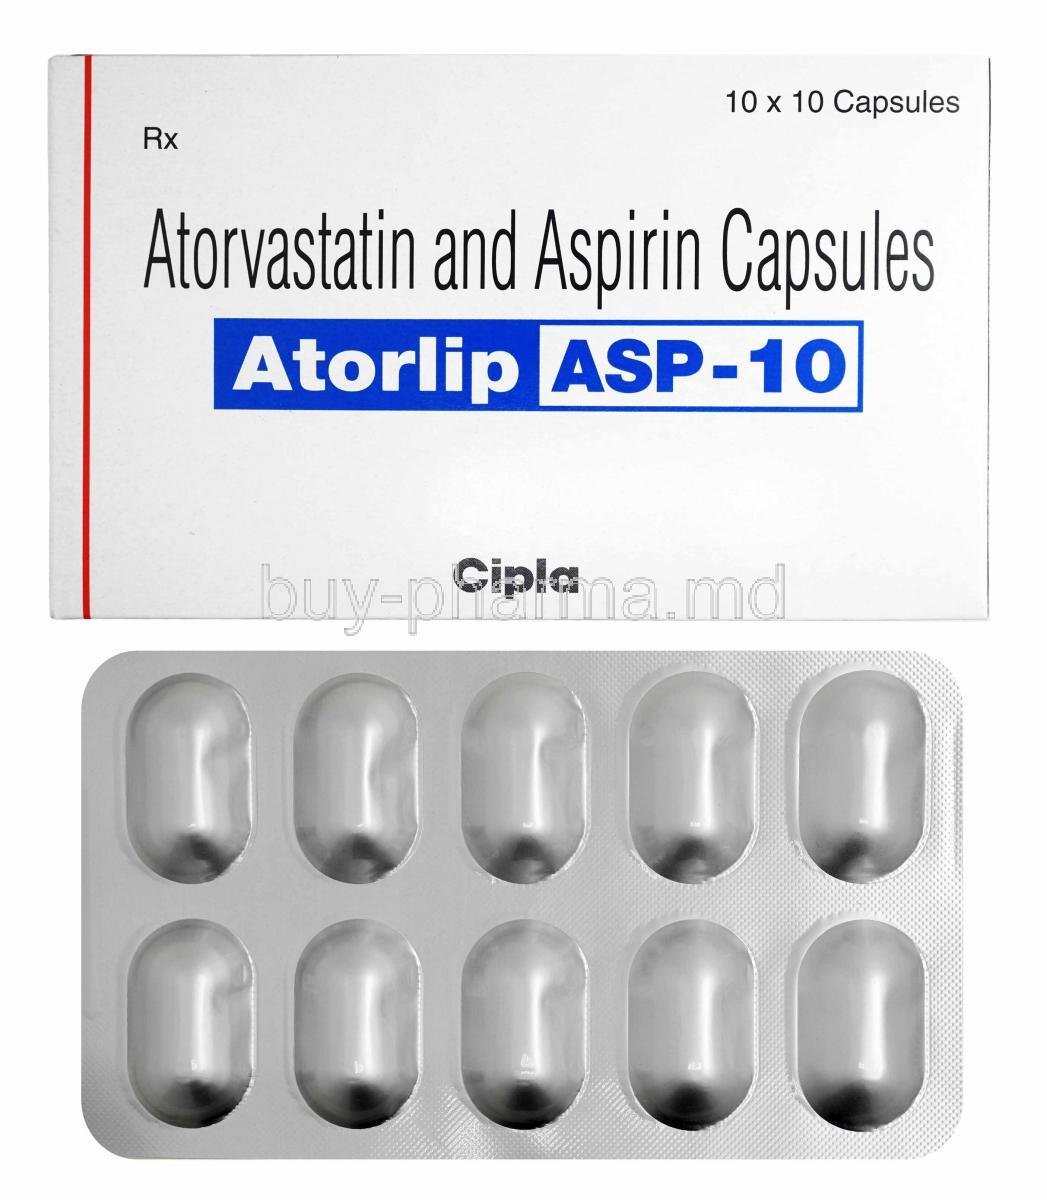 Atorlip-ASP, Atorvastatin and Aspirin box and capsules